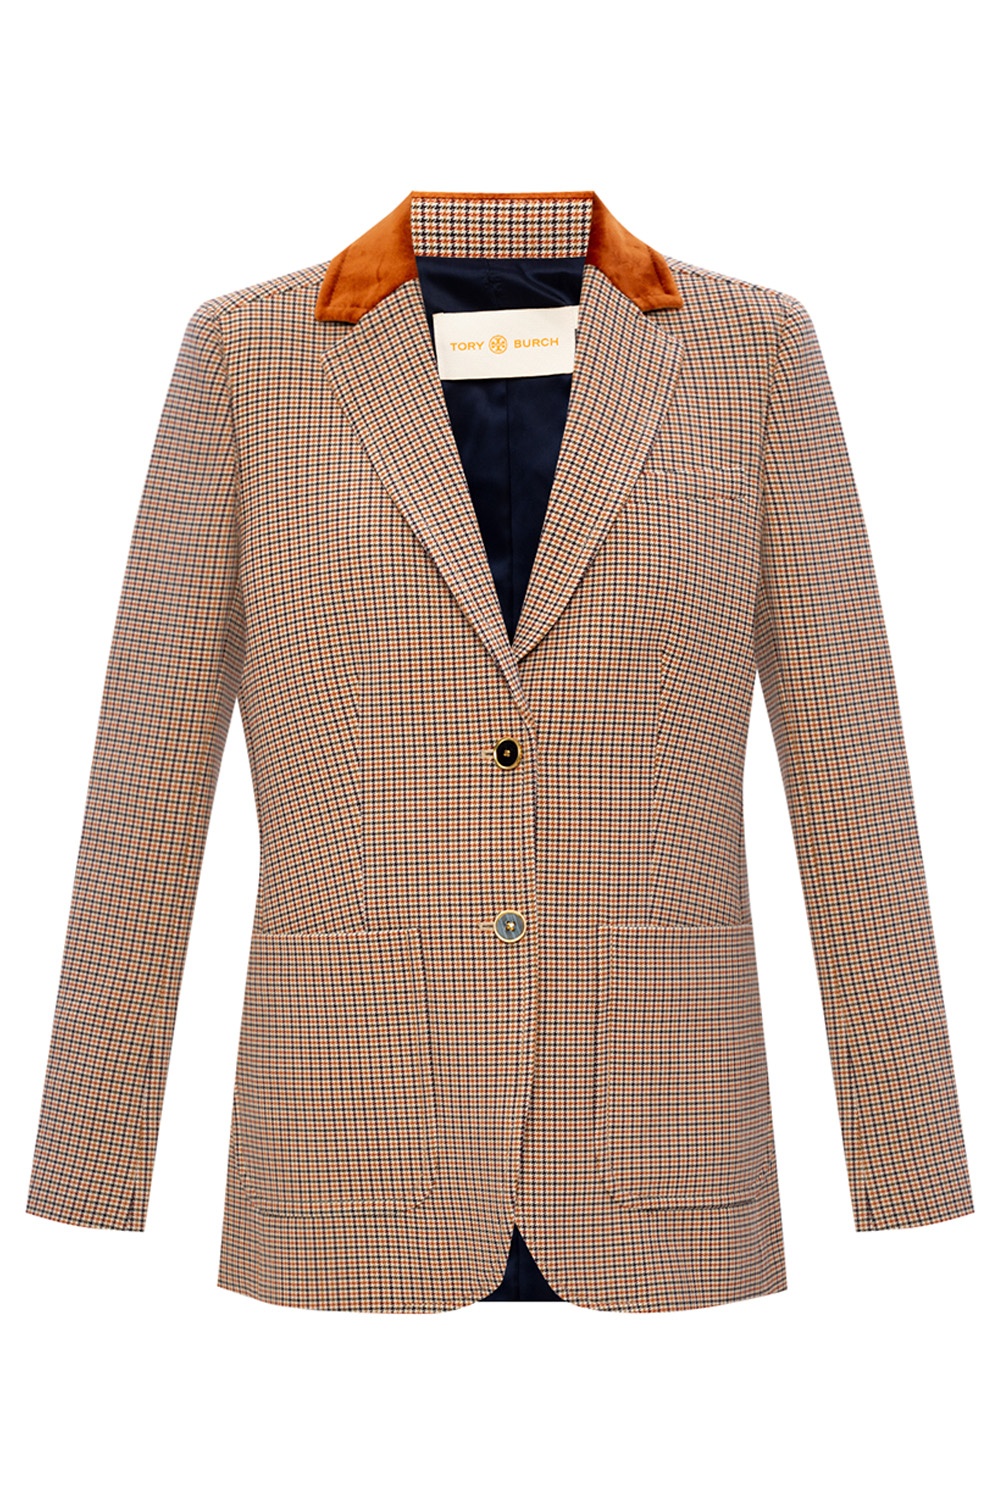 Tory Burch Checked blazer | Women's Clothing | Vitkac